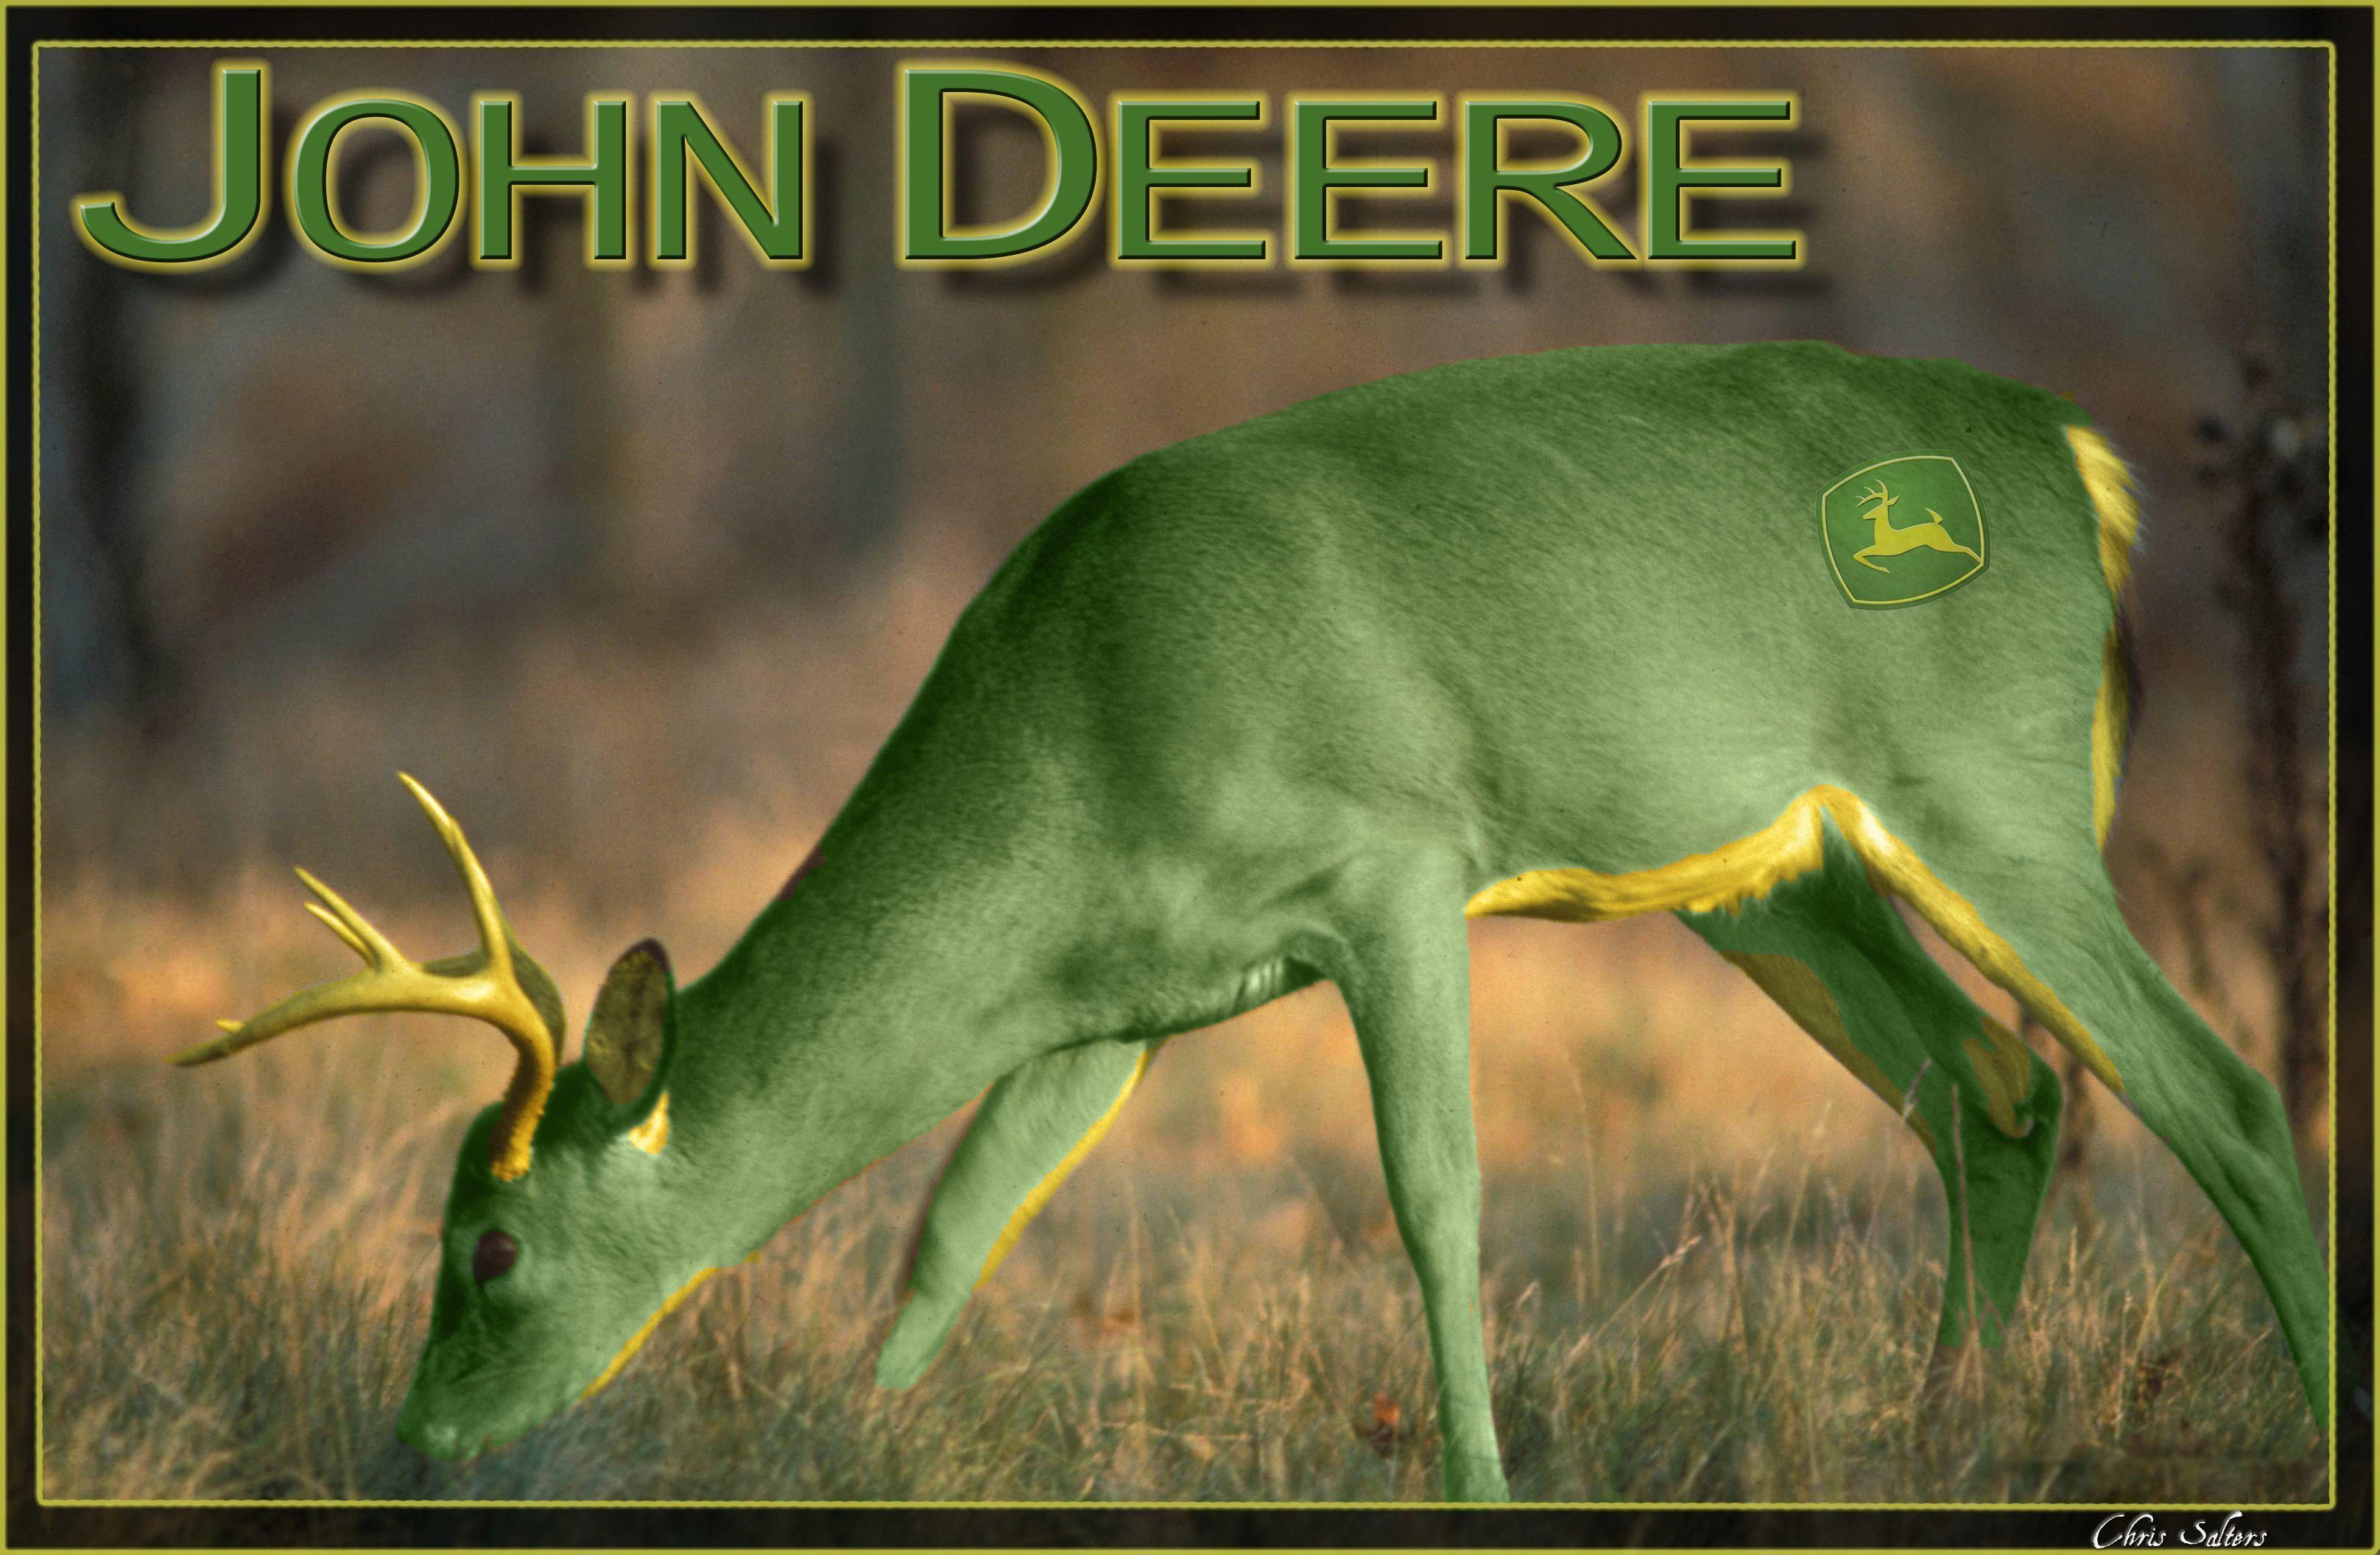 The Real John Deere